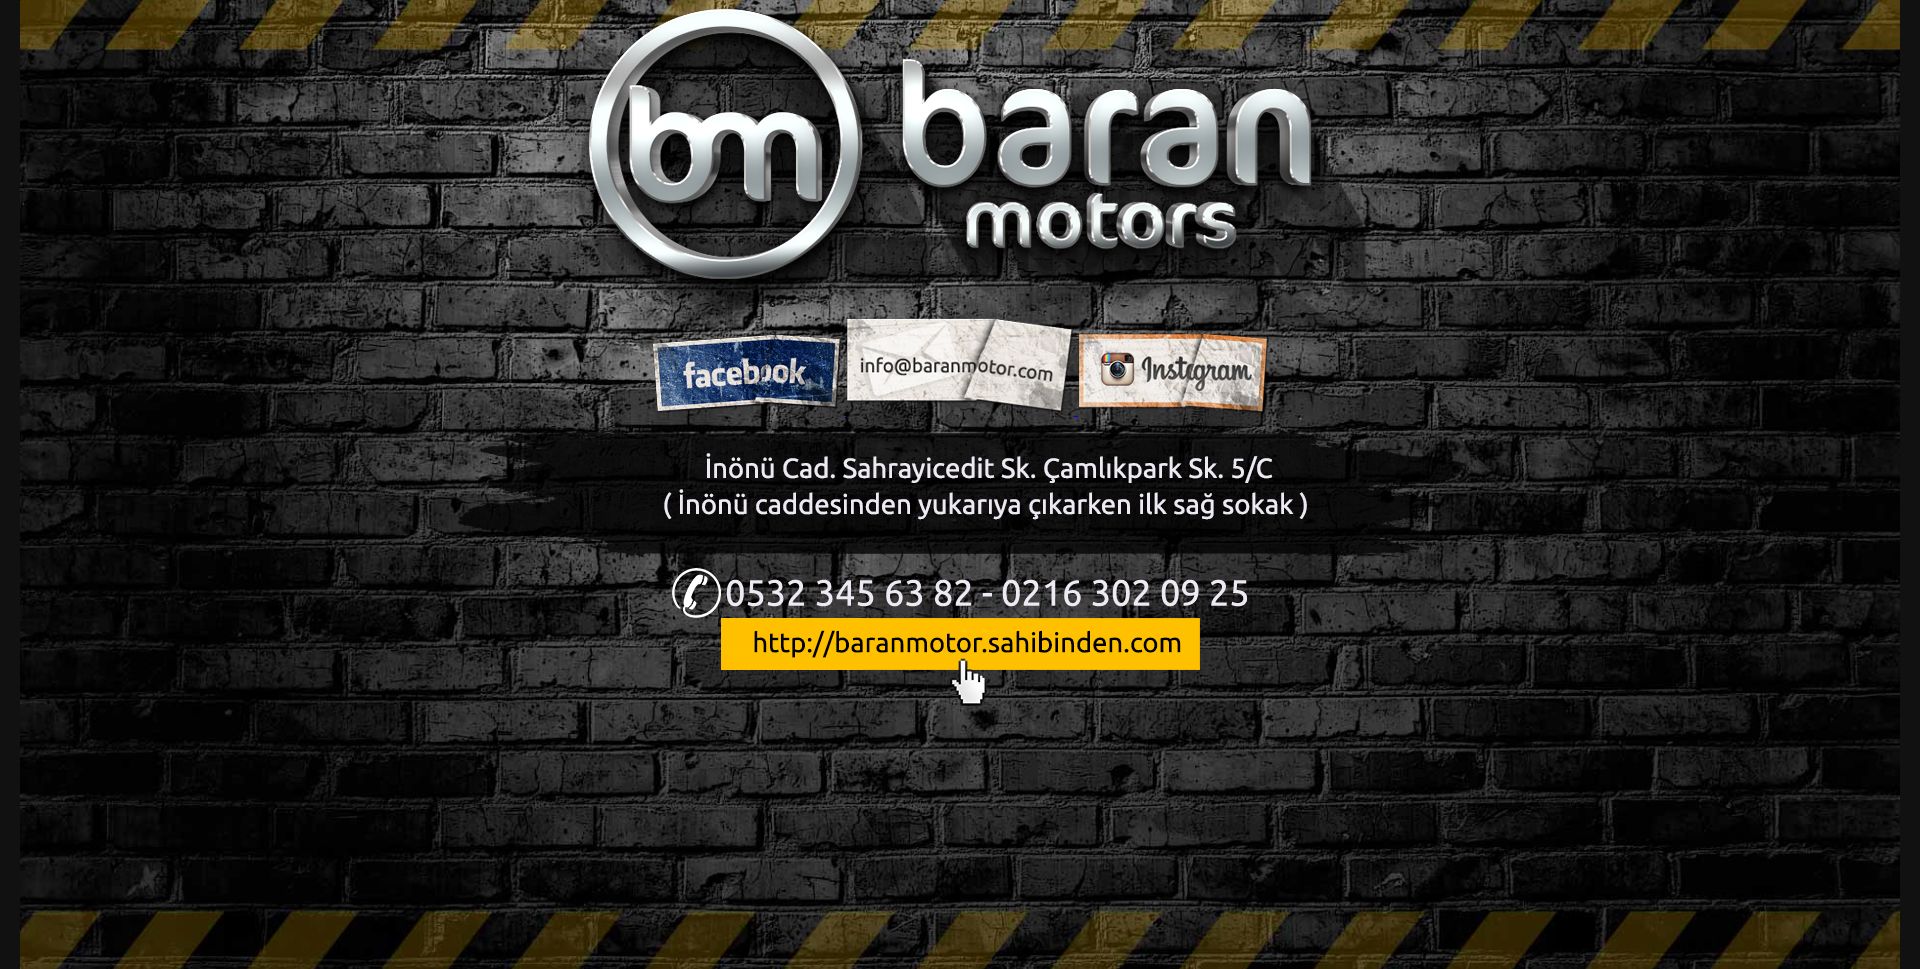 Baran Motors İstanbul Web Tasarım